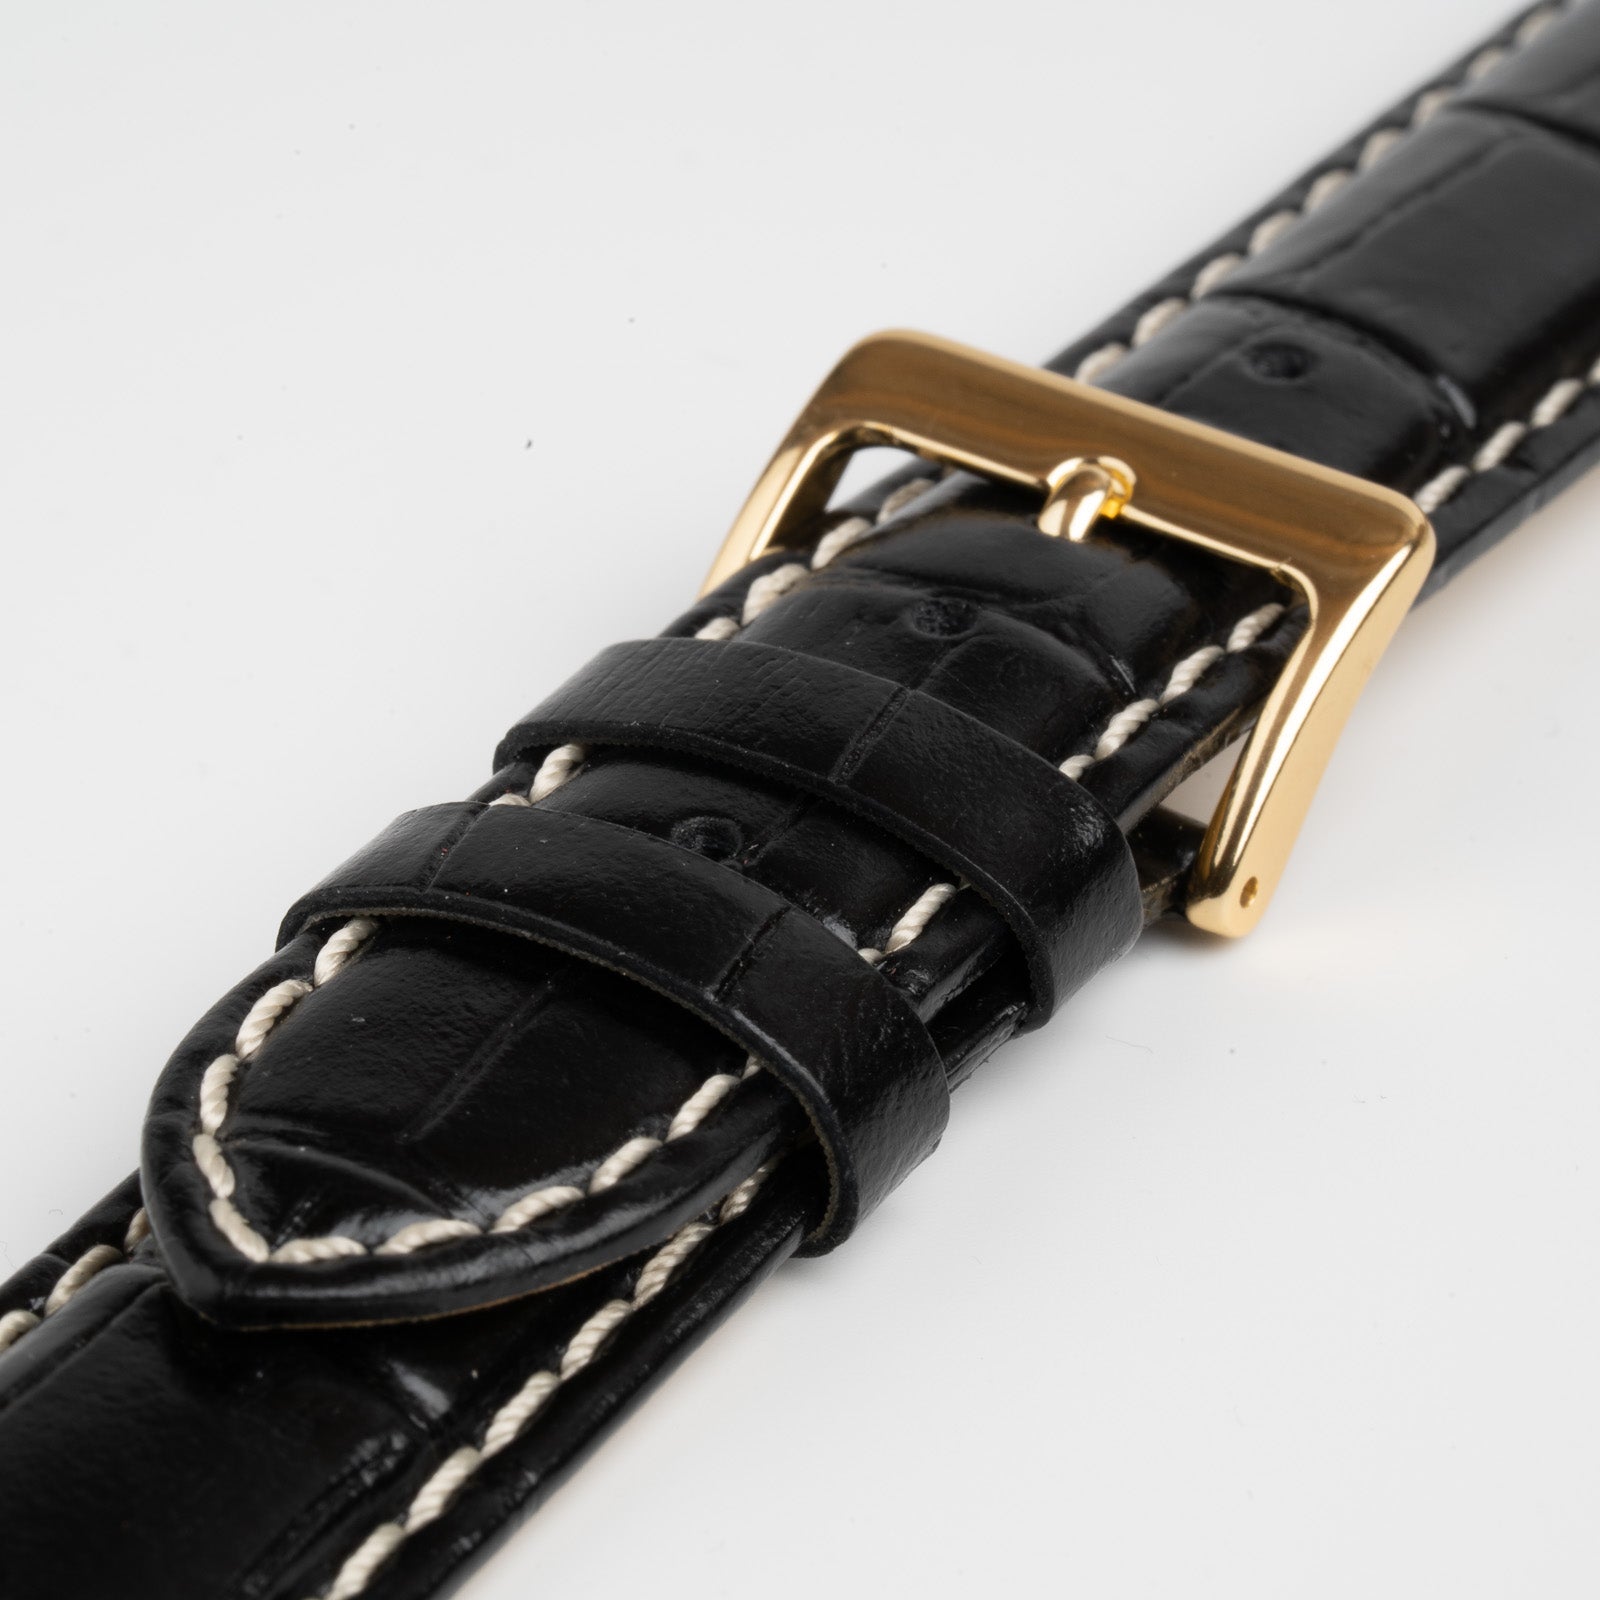 Mayfair Classic Black Watch Strap